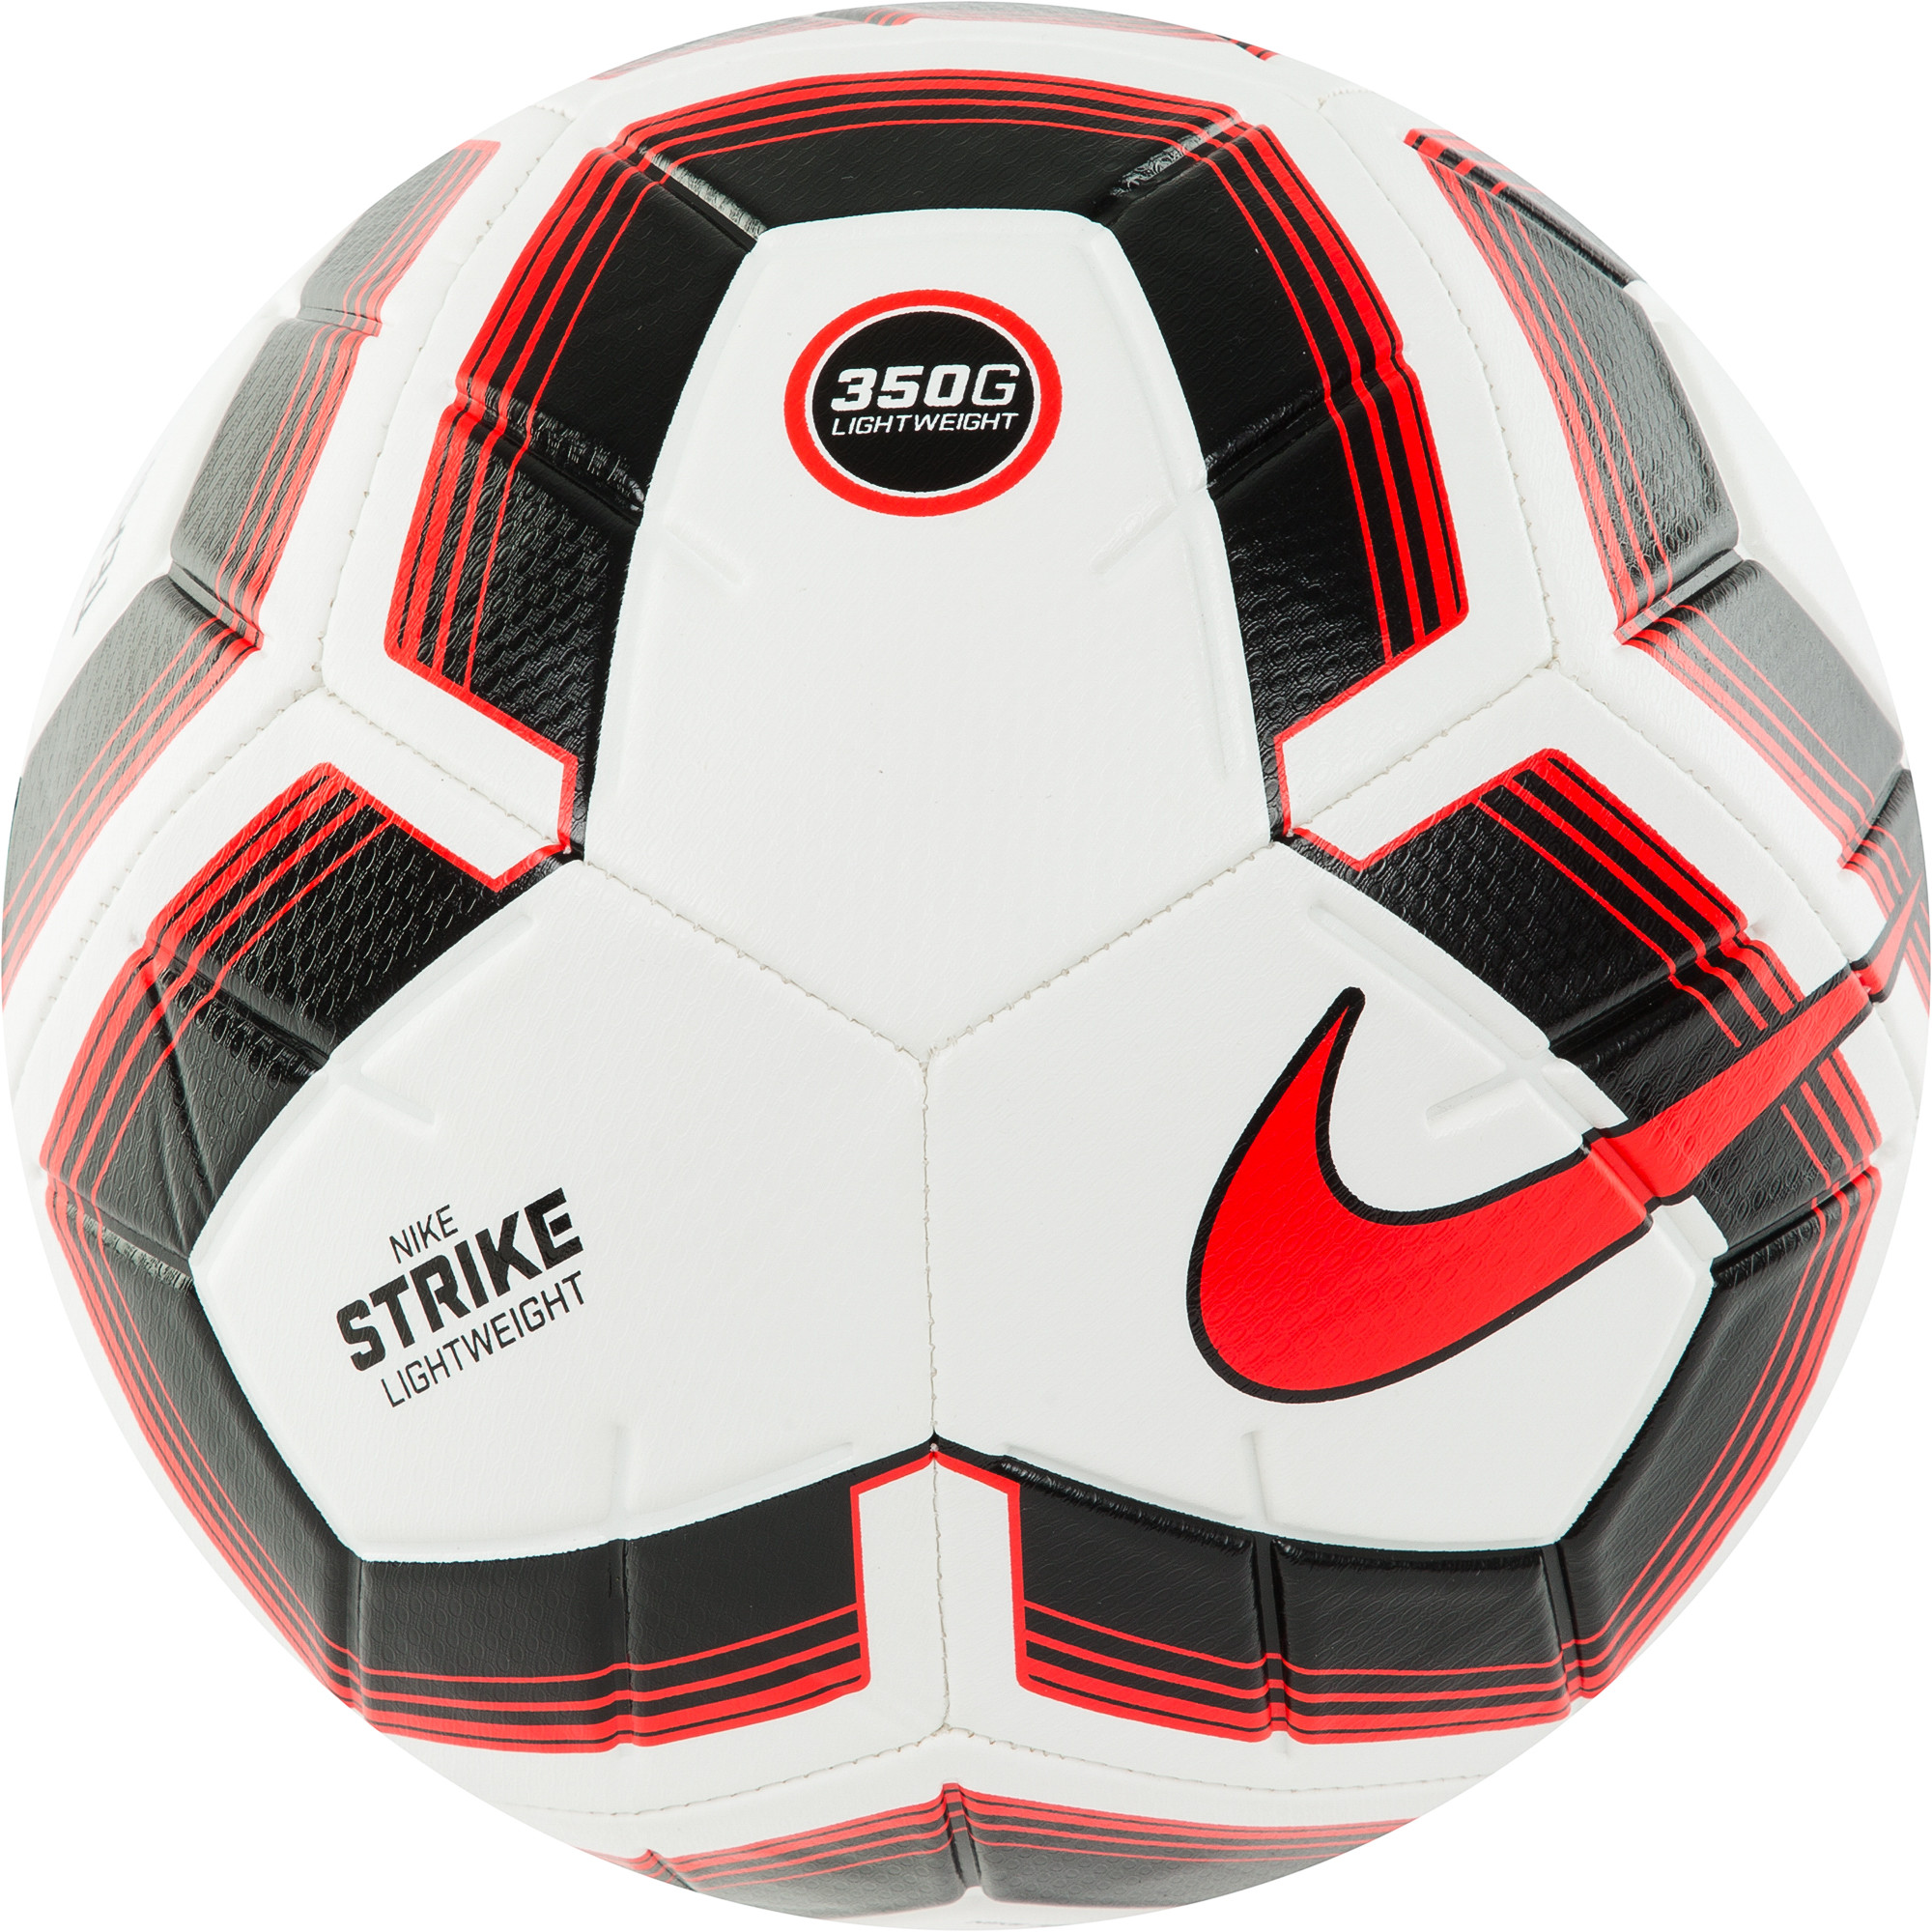 М'яч футбольний Nike NK STRK TEAM 350G - SP20